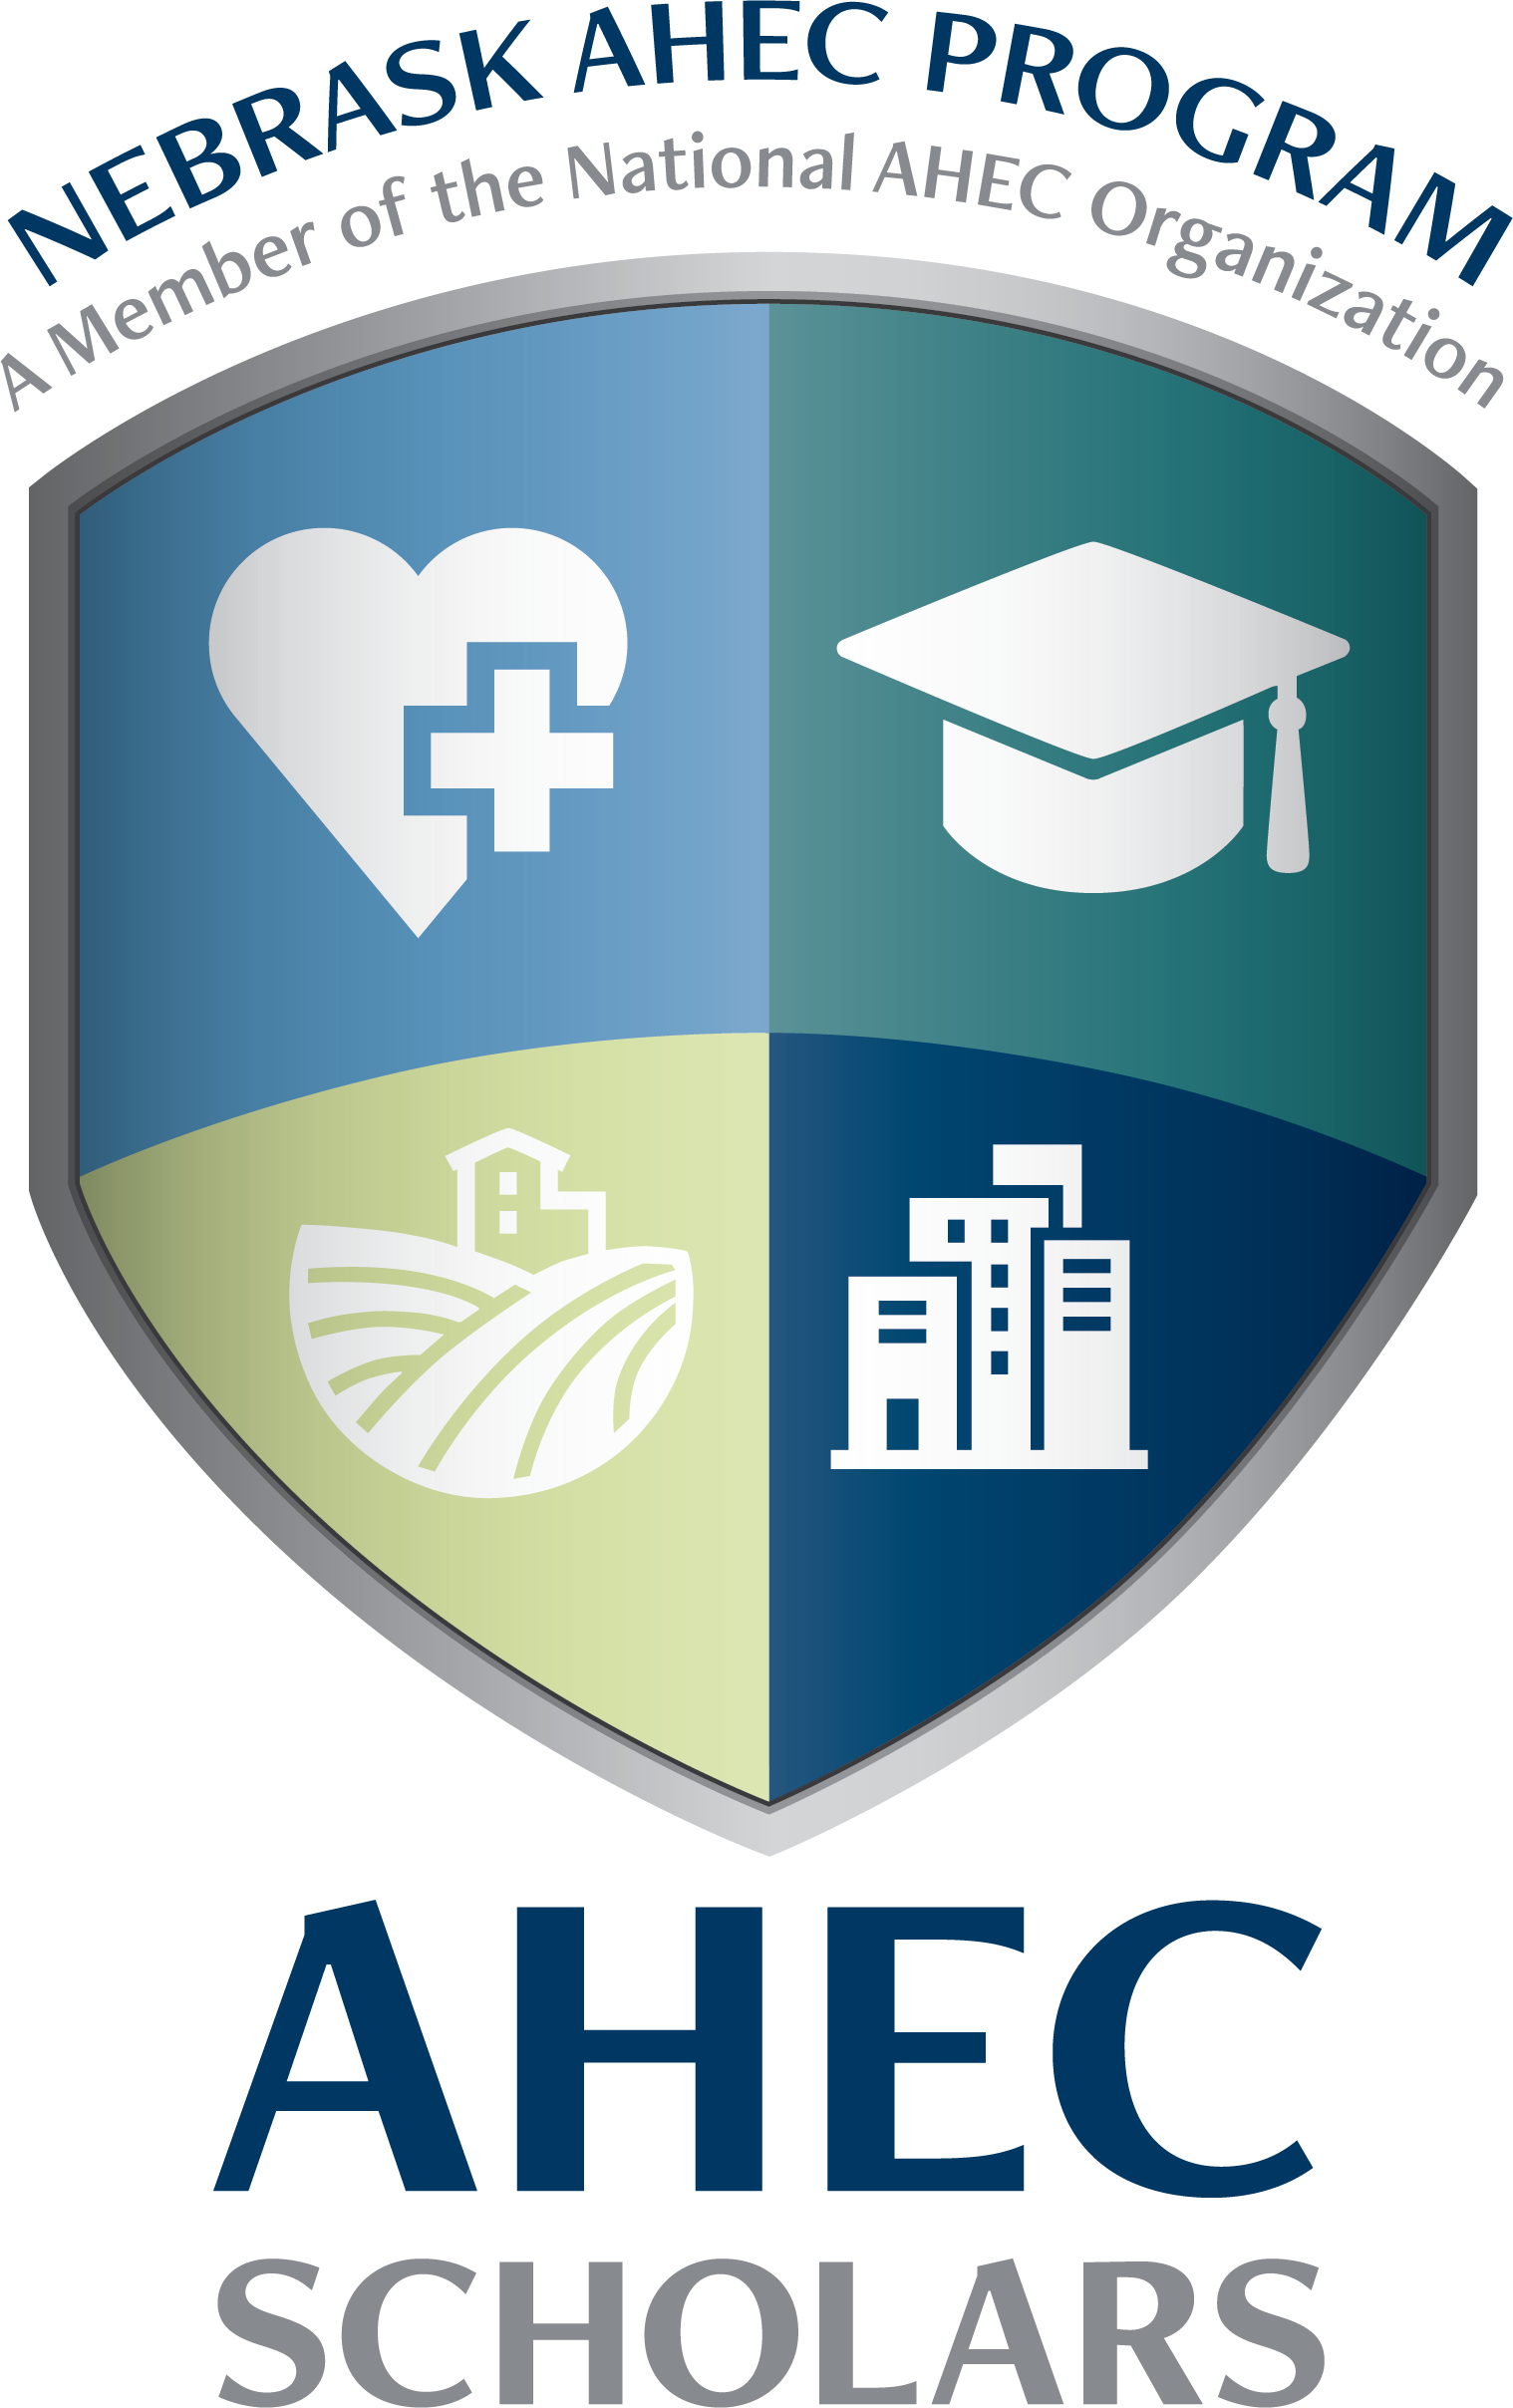 Nebraska AHEC Program, AHEC Scholars Logo